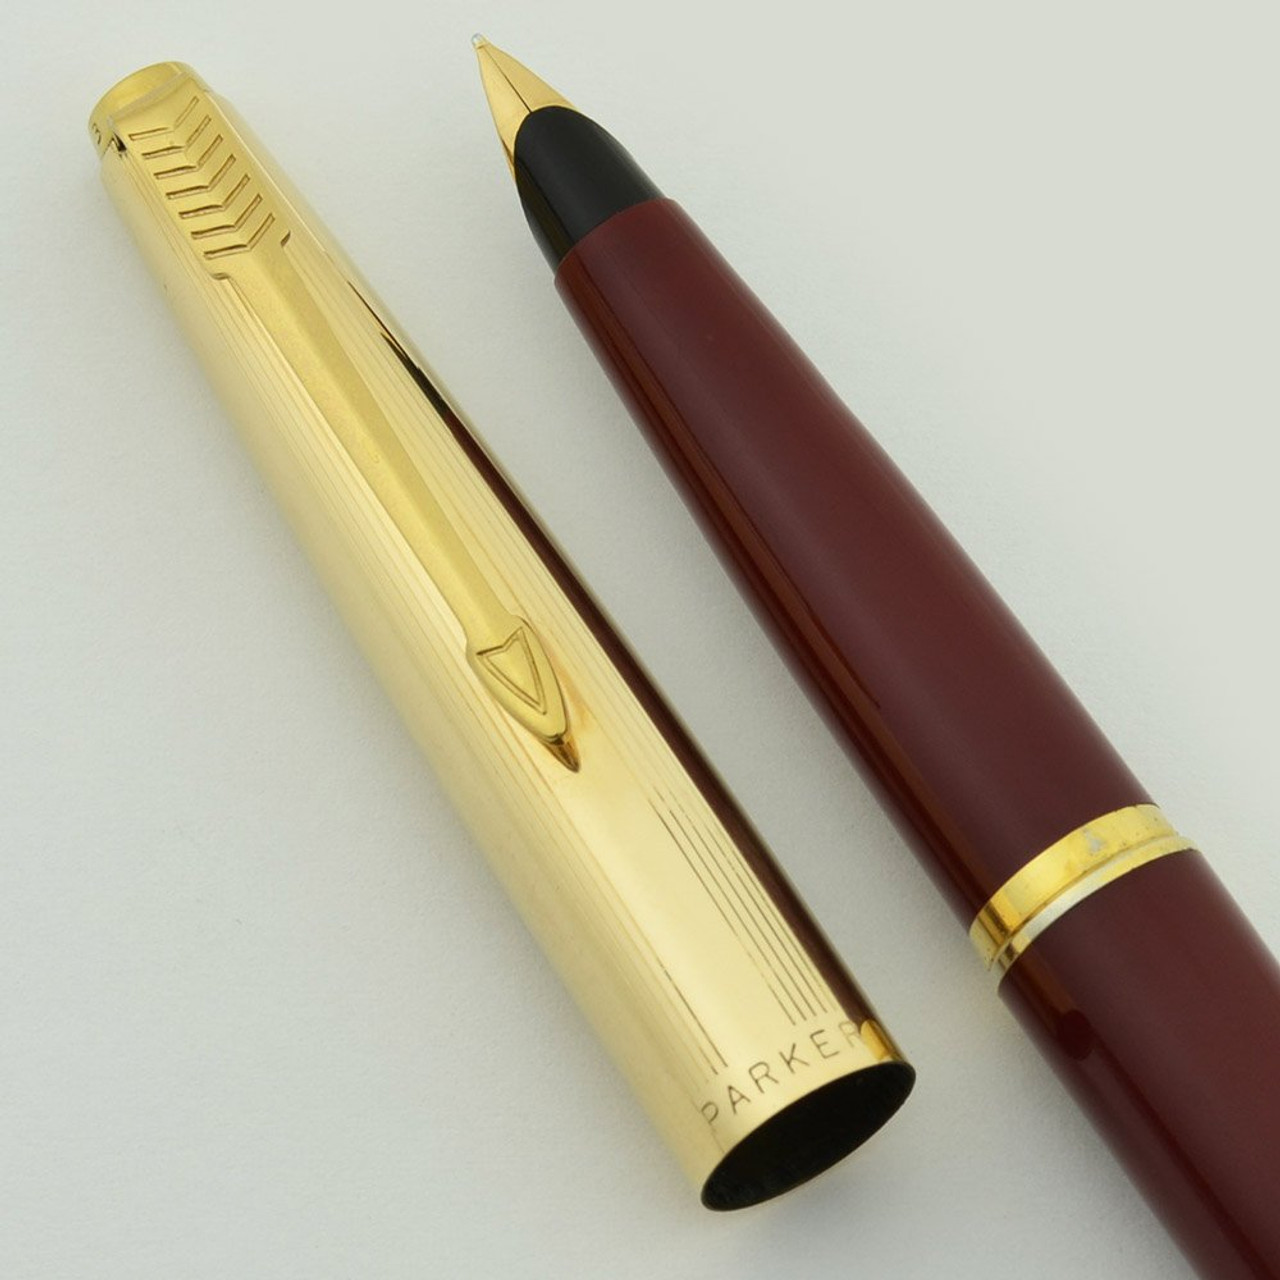 Parker 45 Custom Fountain Pen - Red, Gold Filled Cap, Medium 14k Nib (Near Mint, Works Well)